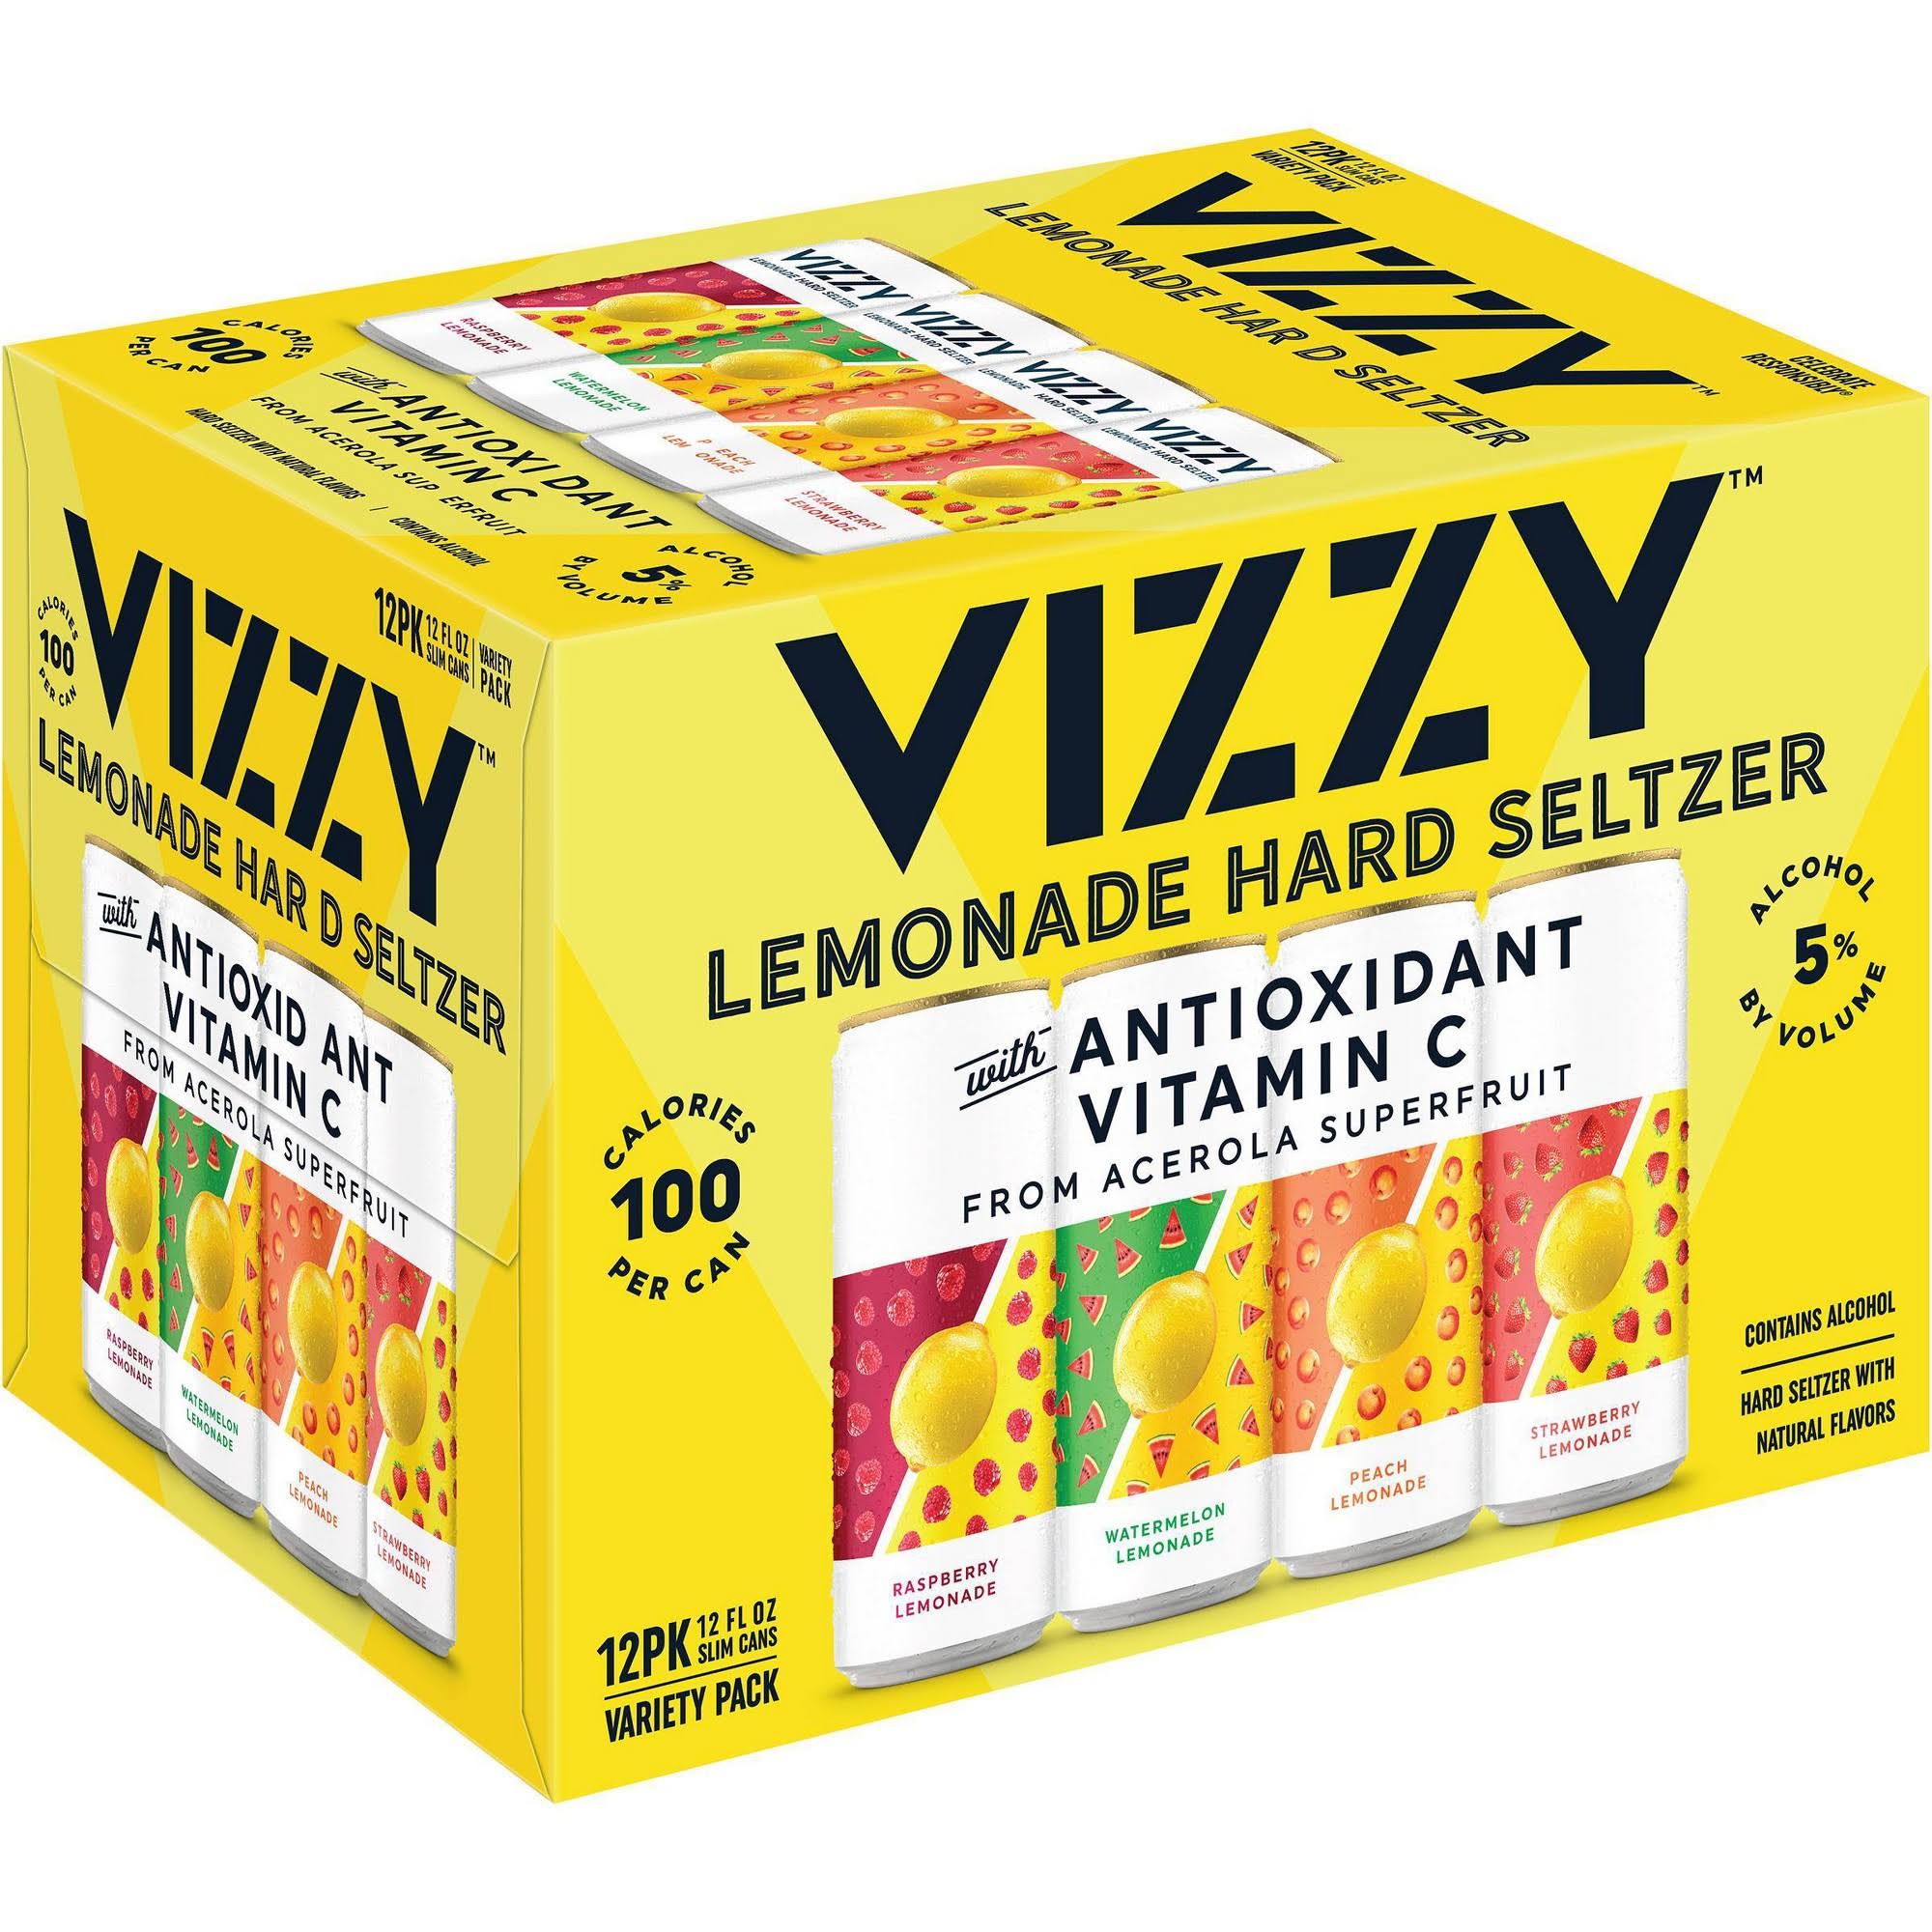 Vizzy Hard Seltzer, Lemonade, Variety Pack, 12 Pack - 12 pack, 12 fl oz cans